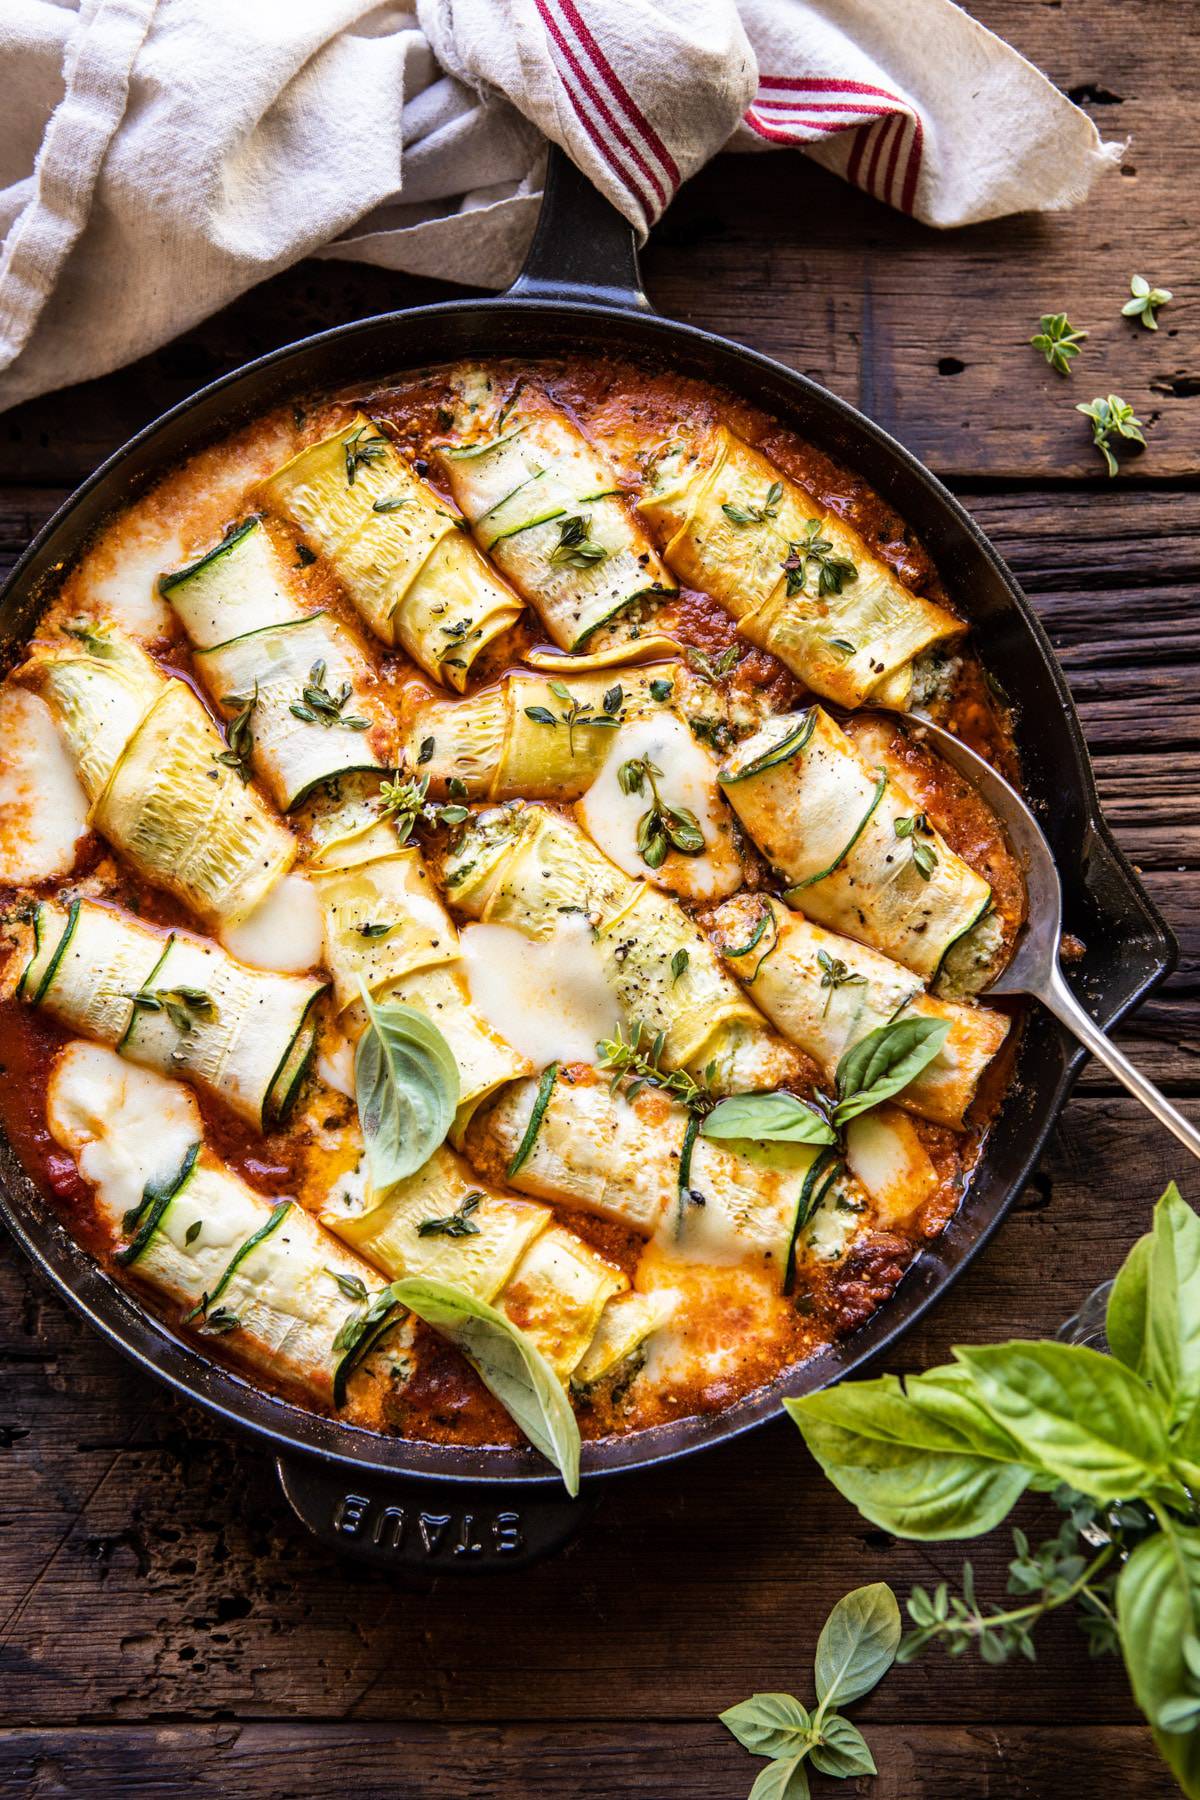 Spicy Pesto and Cheese Stuffed Zucchini Involtini | halfbakedharvest.com #zucchini #cheese #Italian #easyrecipes